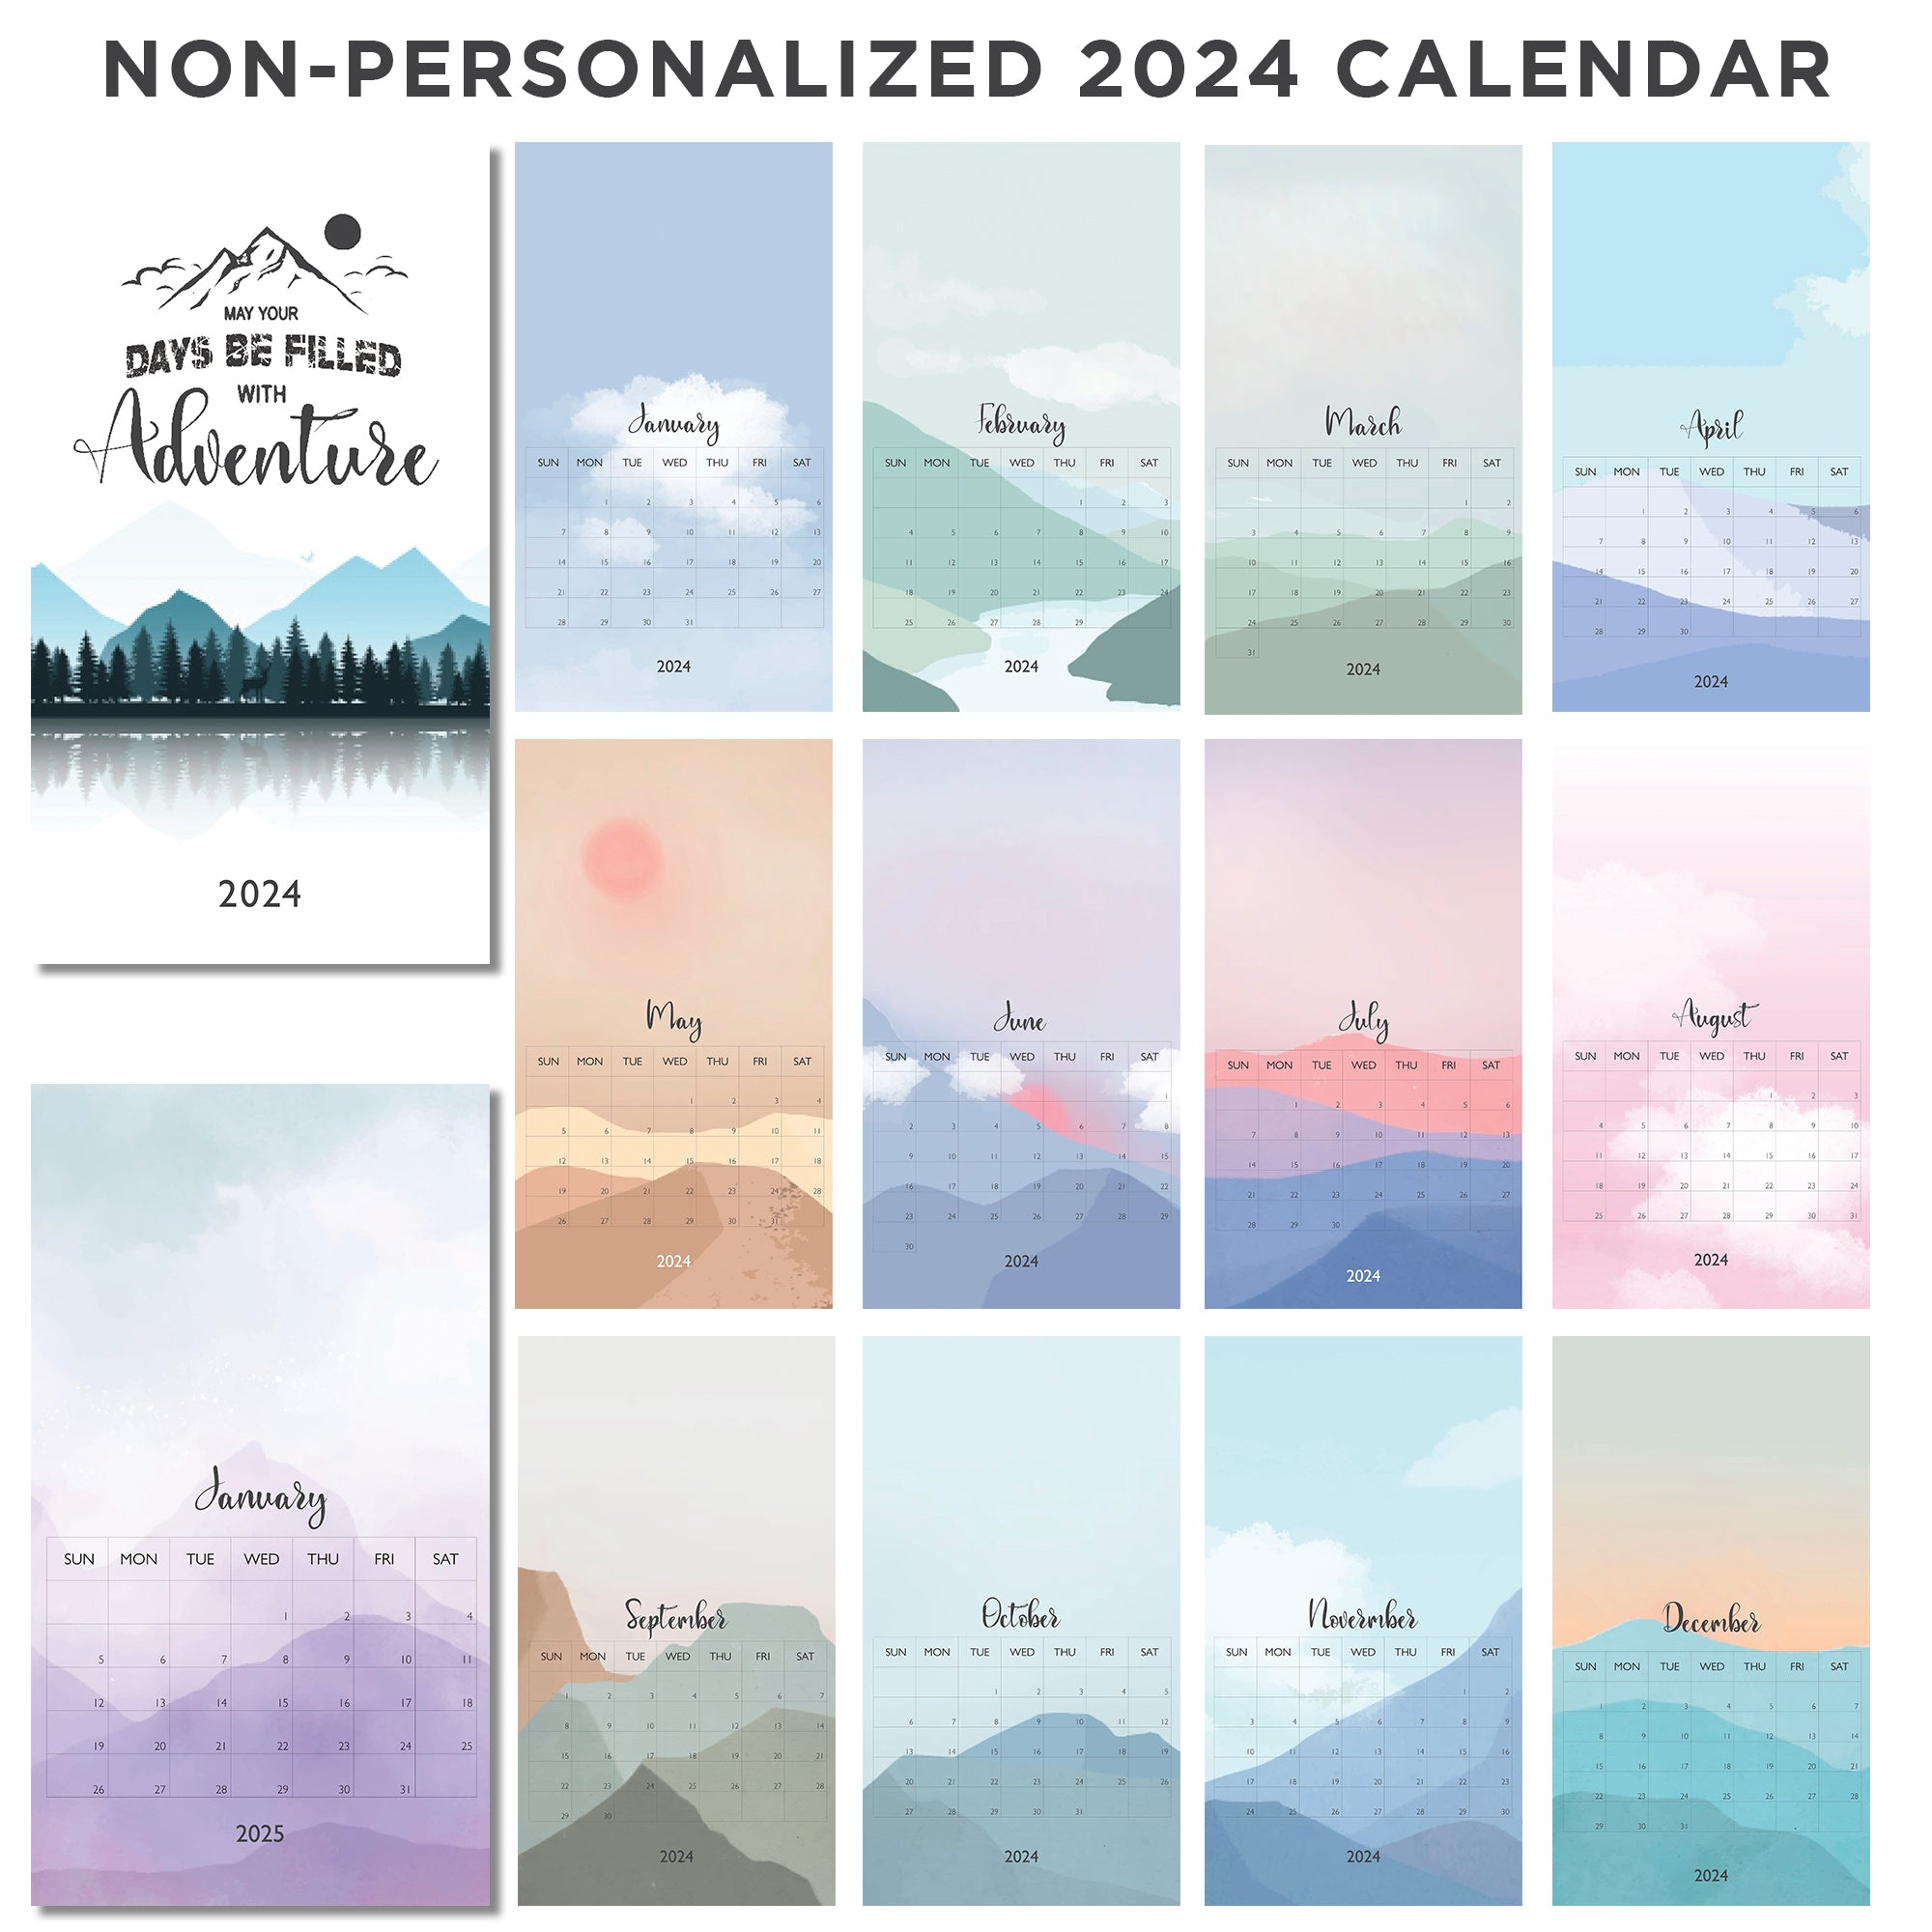 Personalized Photo Calendar 2024